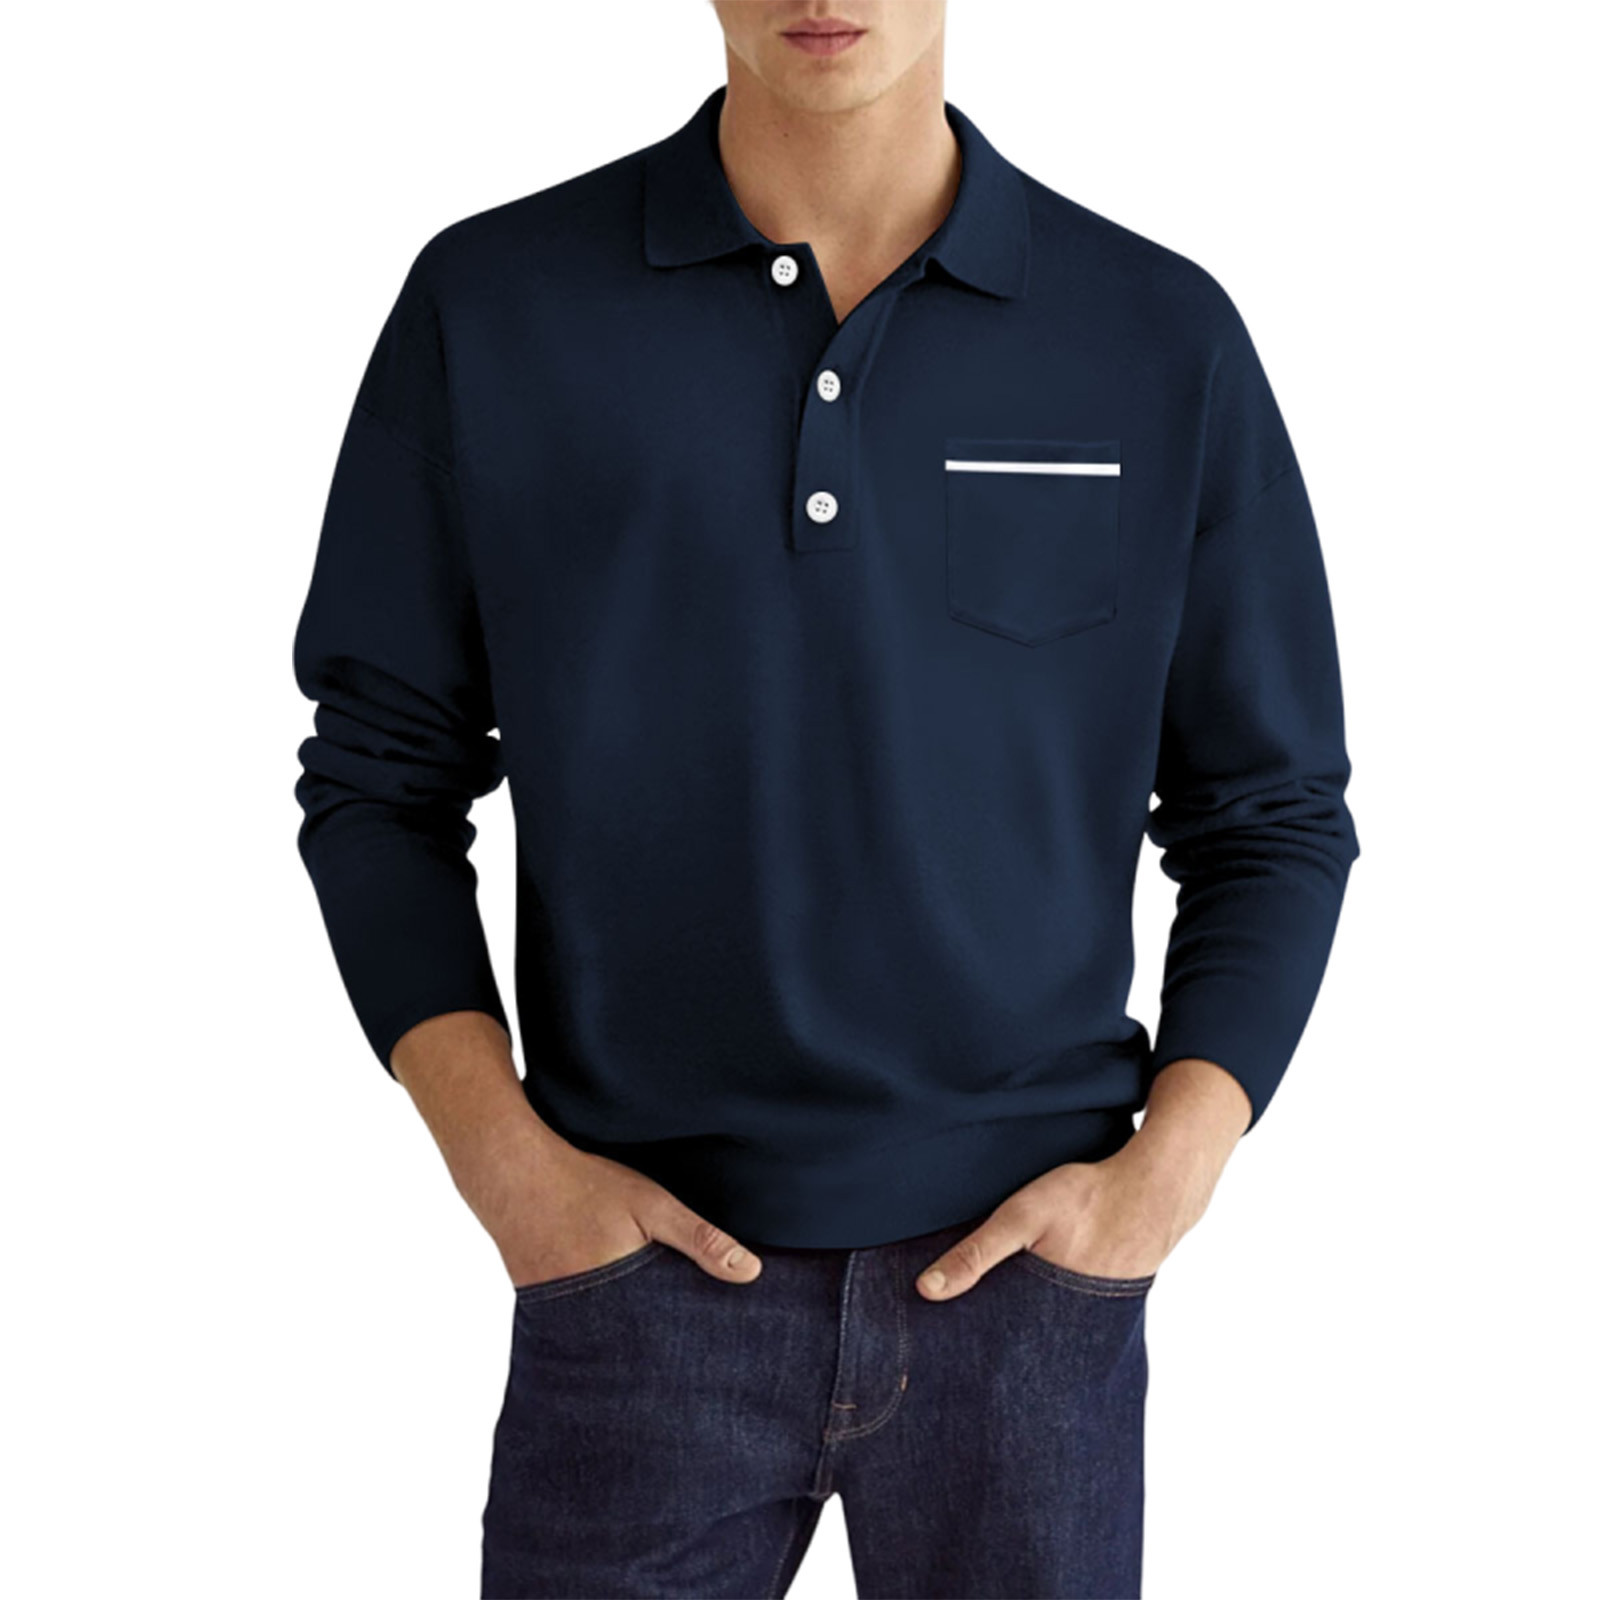 XFLWAM Men's Polo Shirts Long Sleeve Lapel Shirt Fashion Casual Solid ...